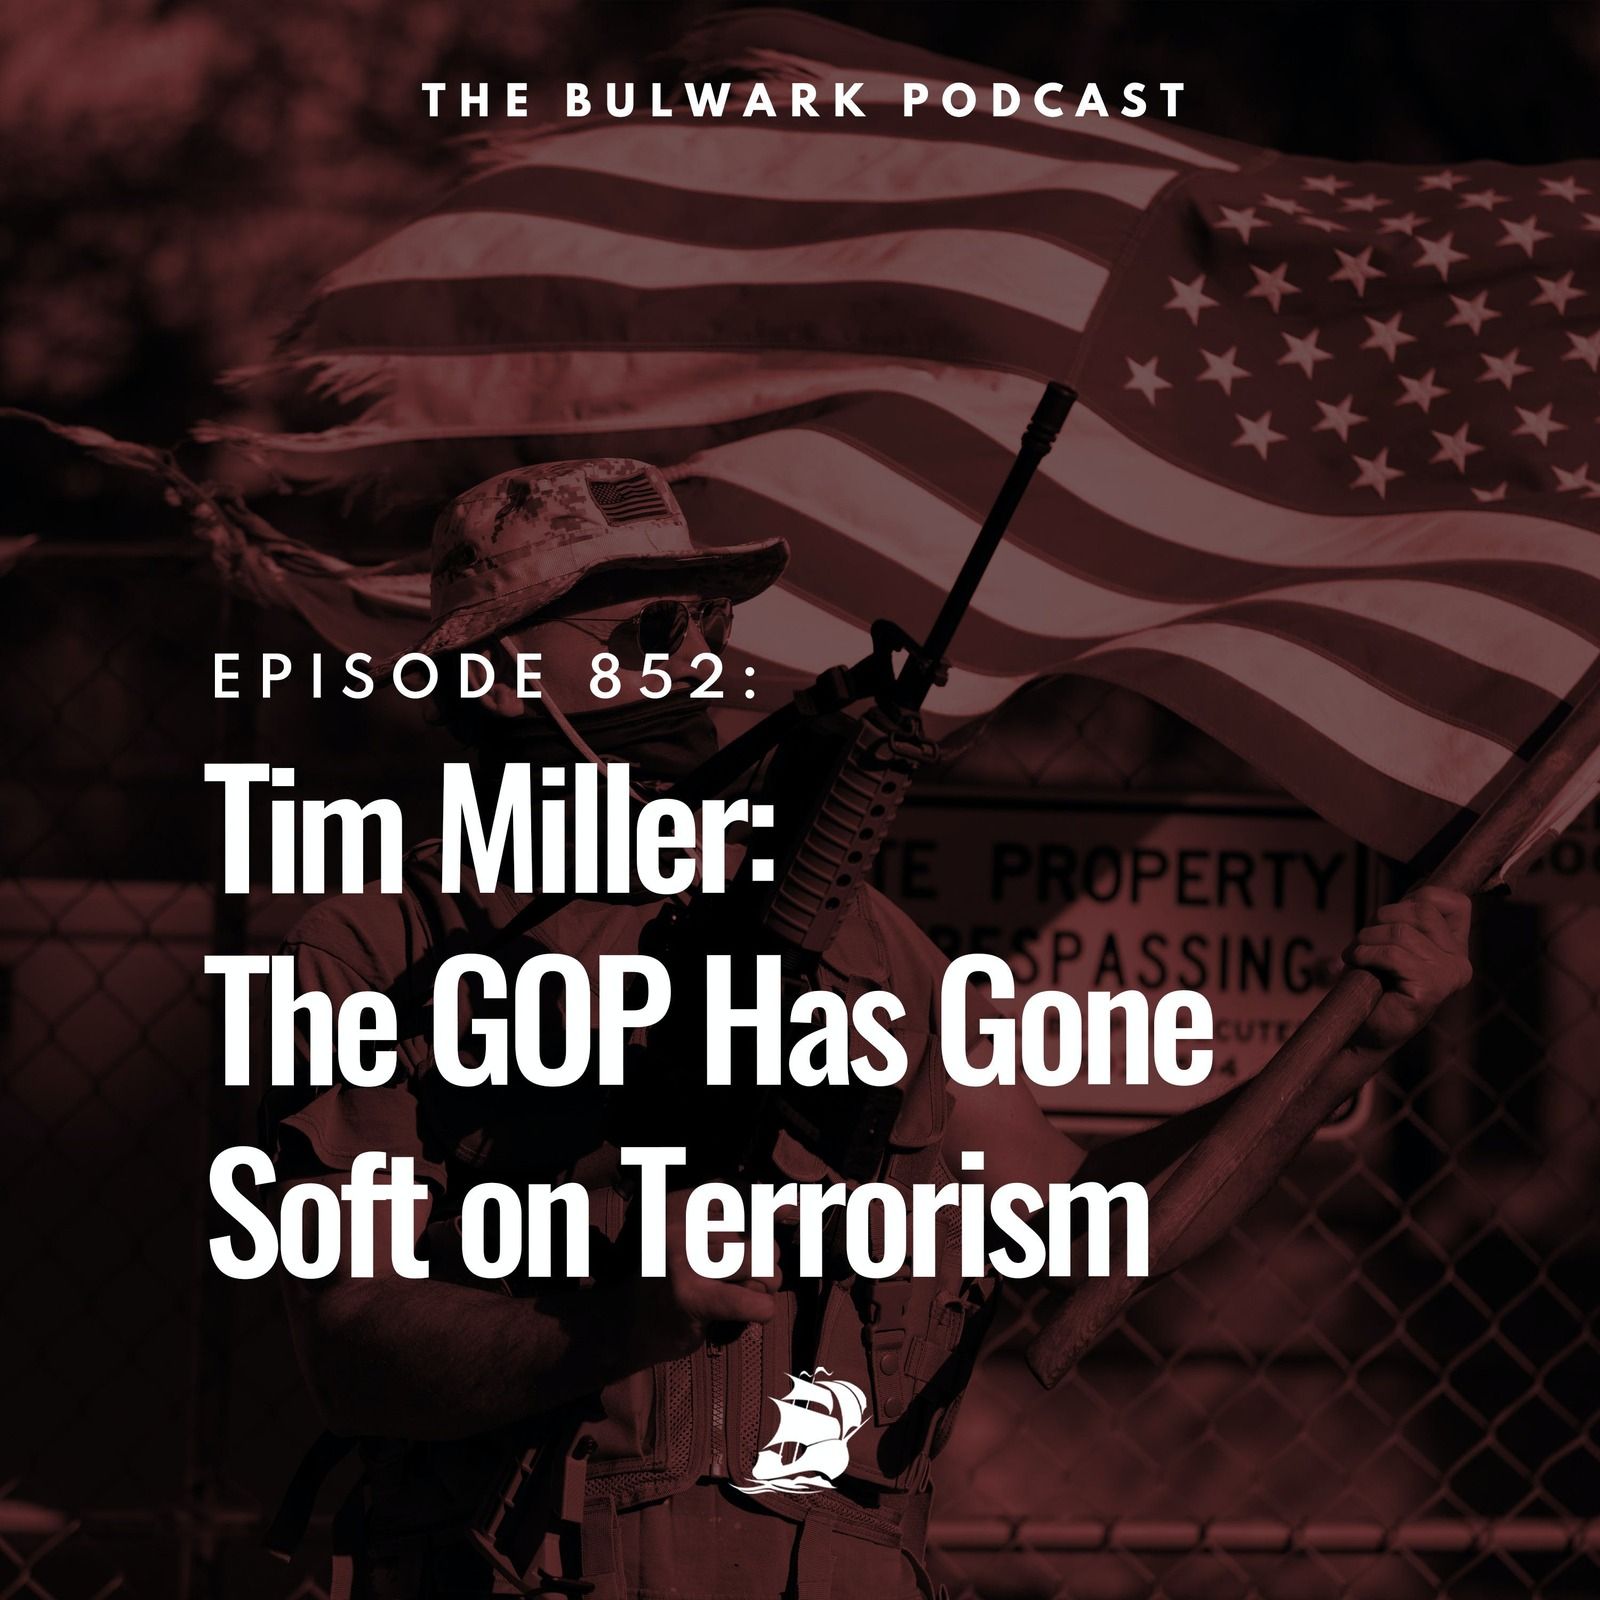 Tim Miller: The GOP Has Gone Soft on Terrorism